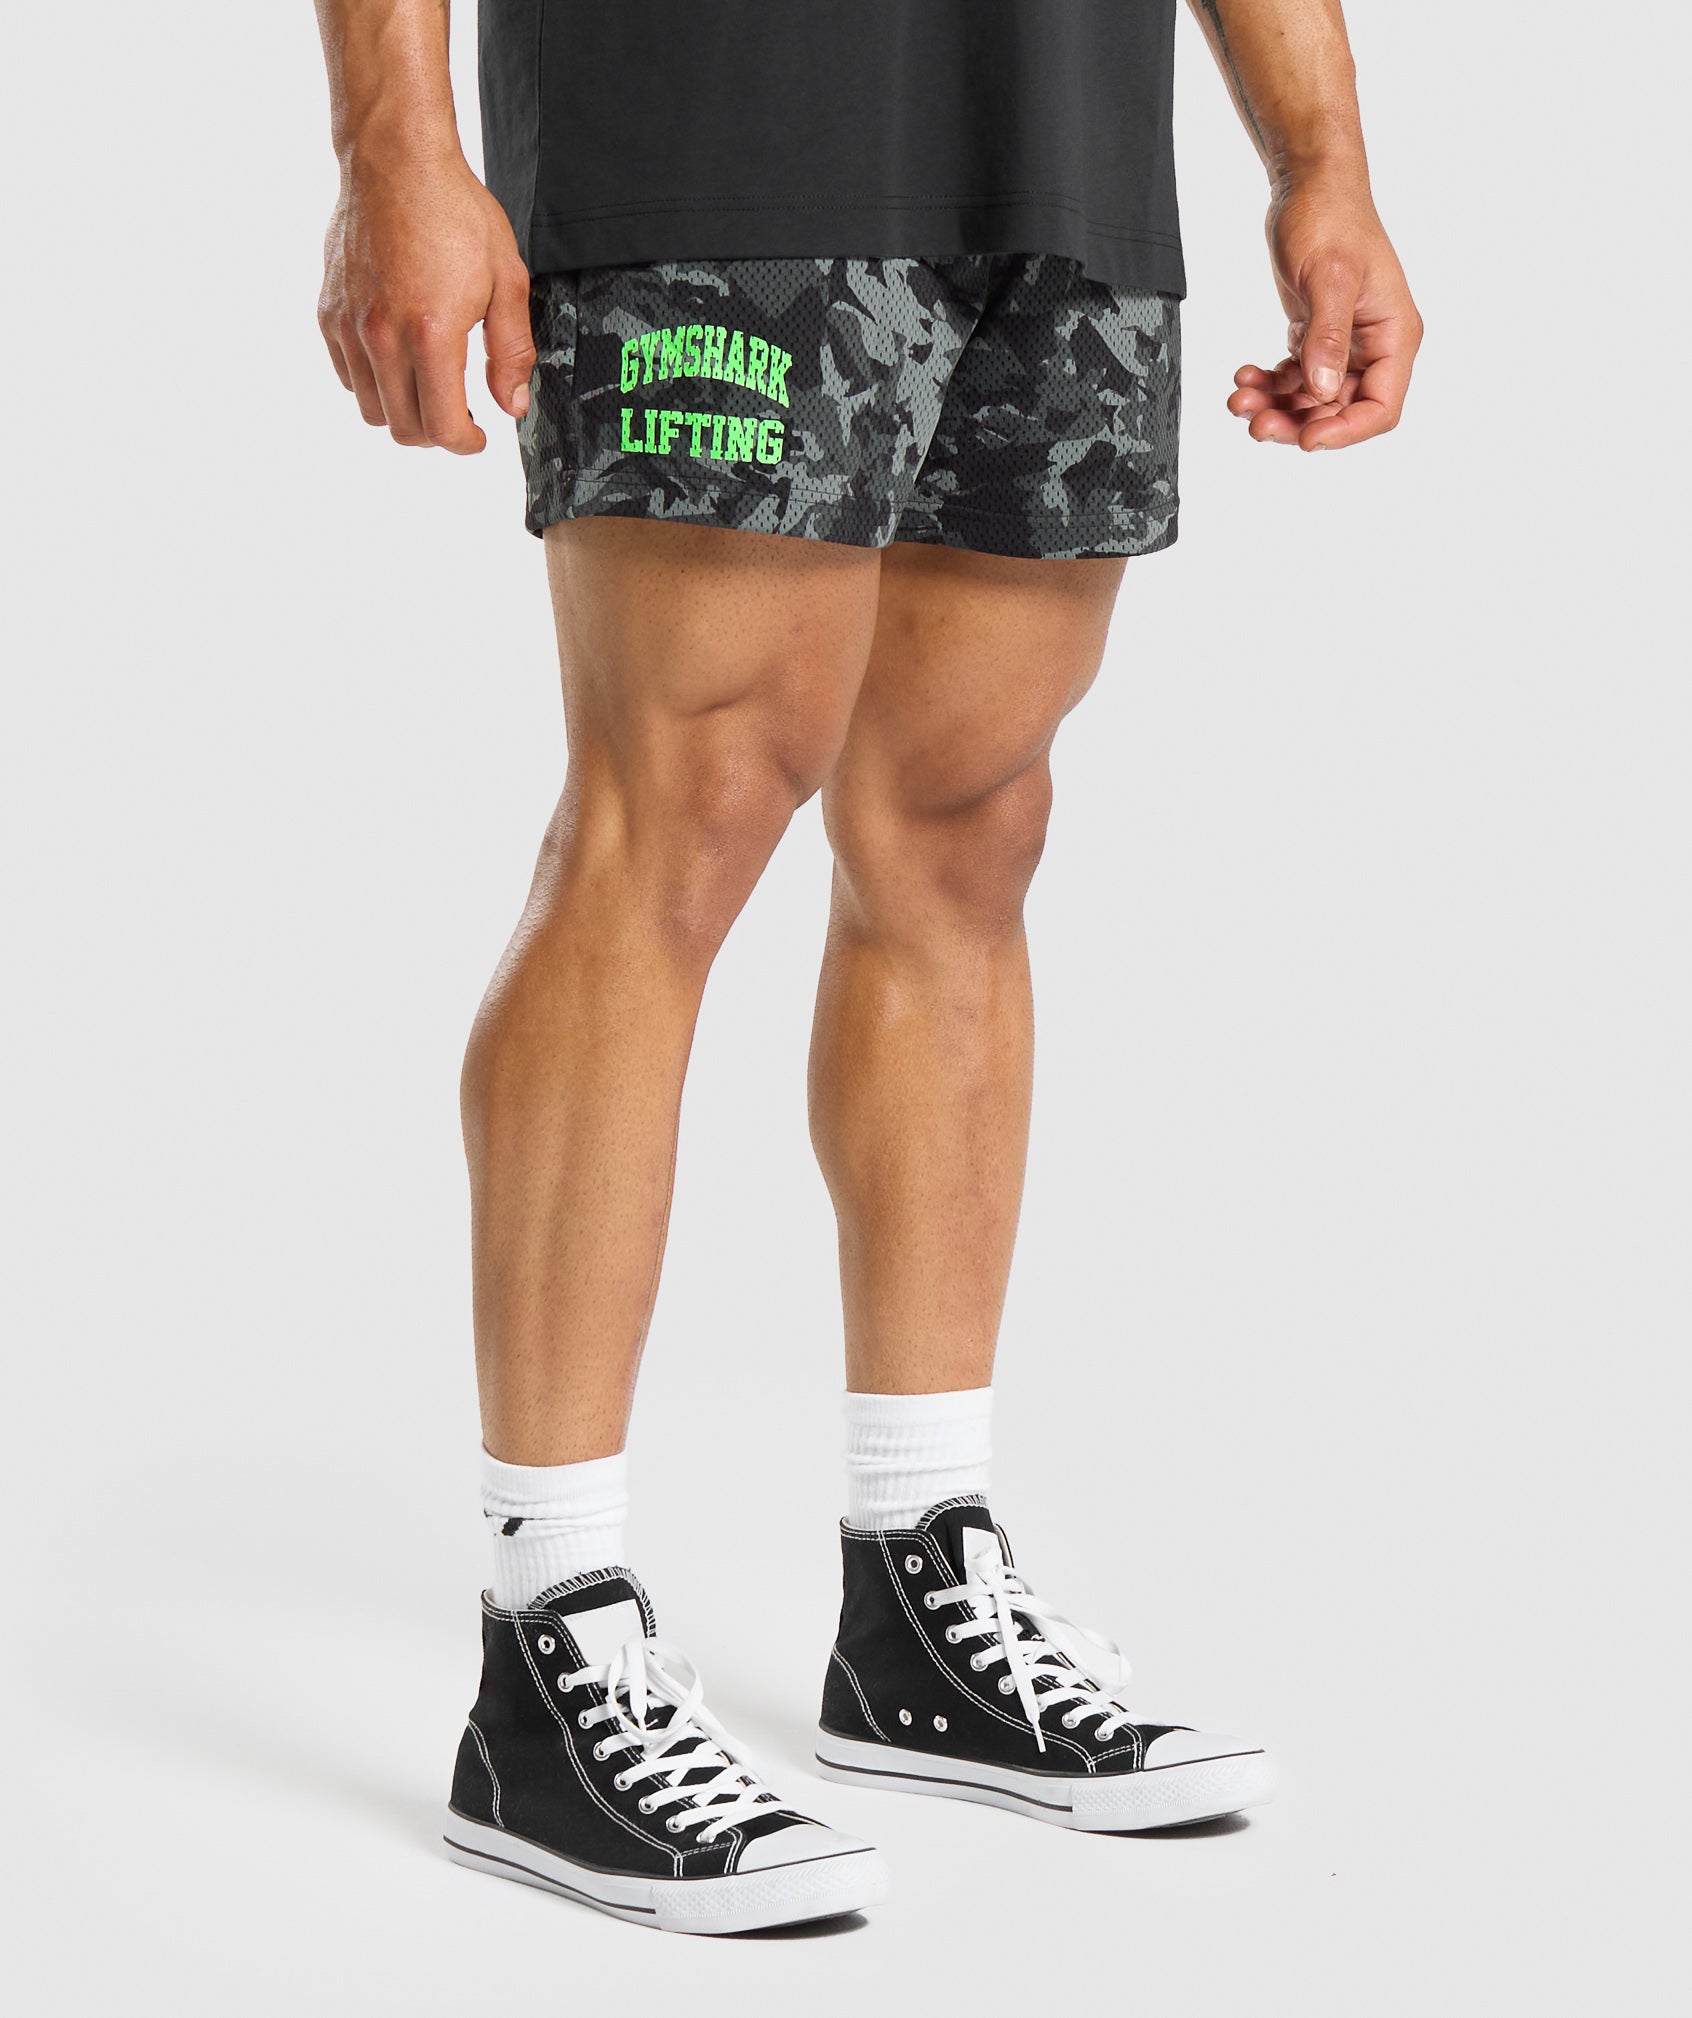 Printed Lifting Mesh 5" Shorts in Black - view 3